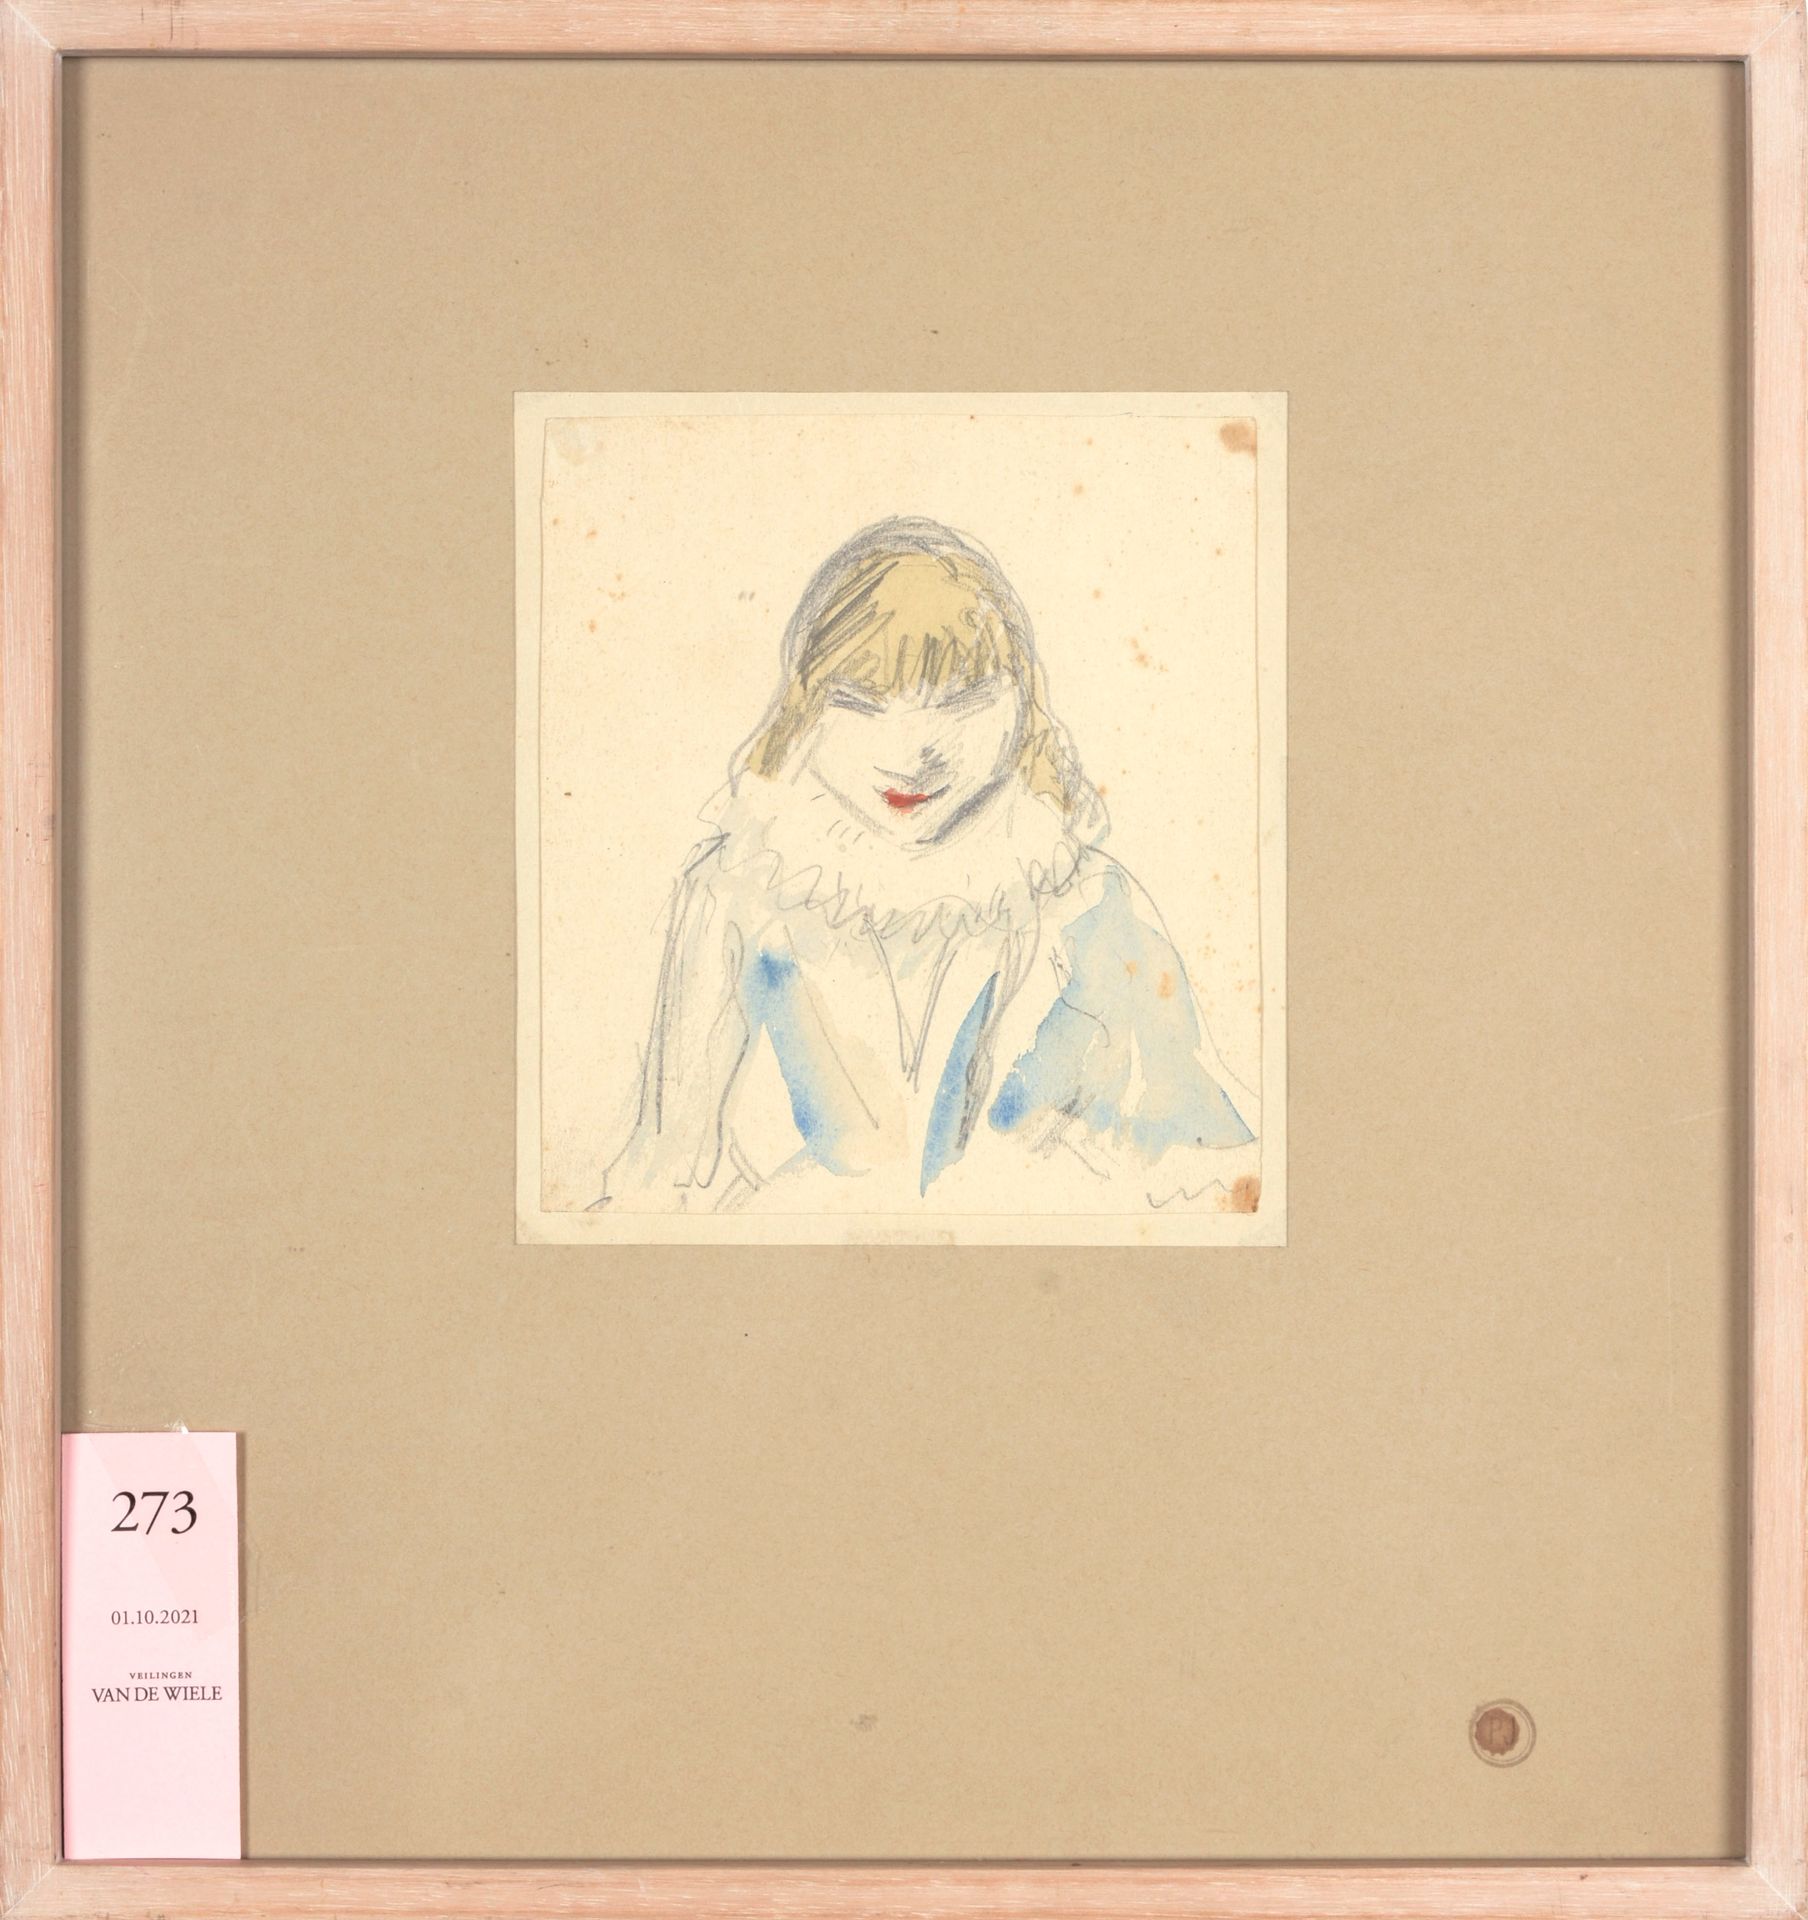 JOOSTENS, Paul (1889-1960) Vrouwenportret

Acquerello (13,5 x 12 cm), laboratori&hellip;